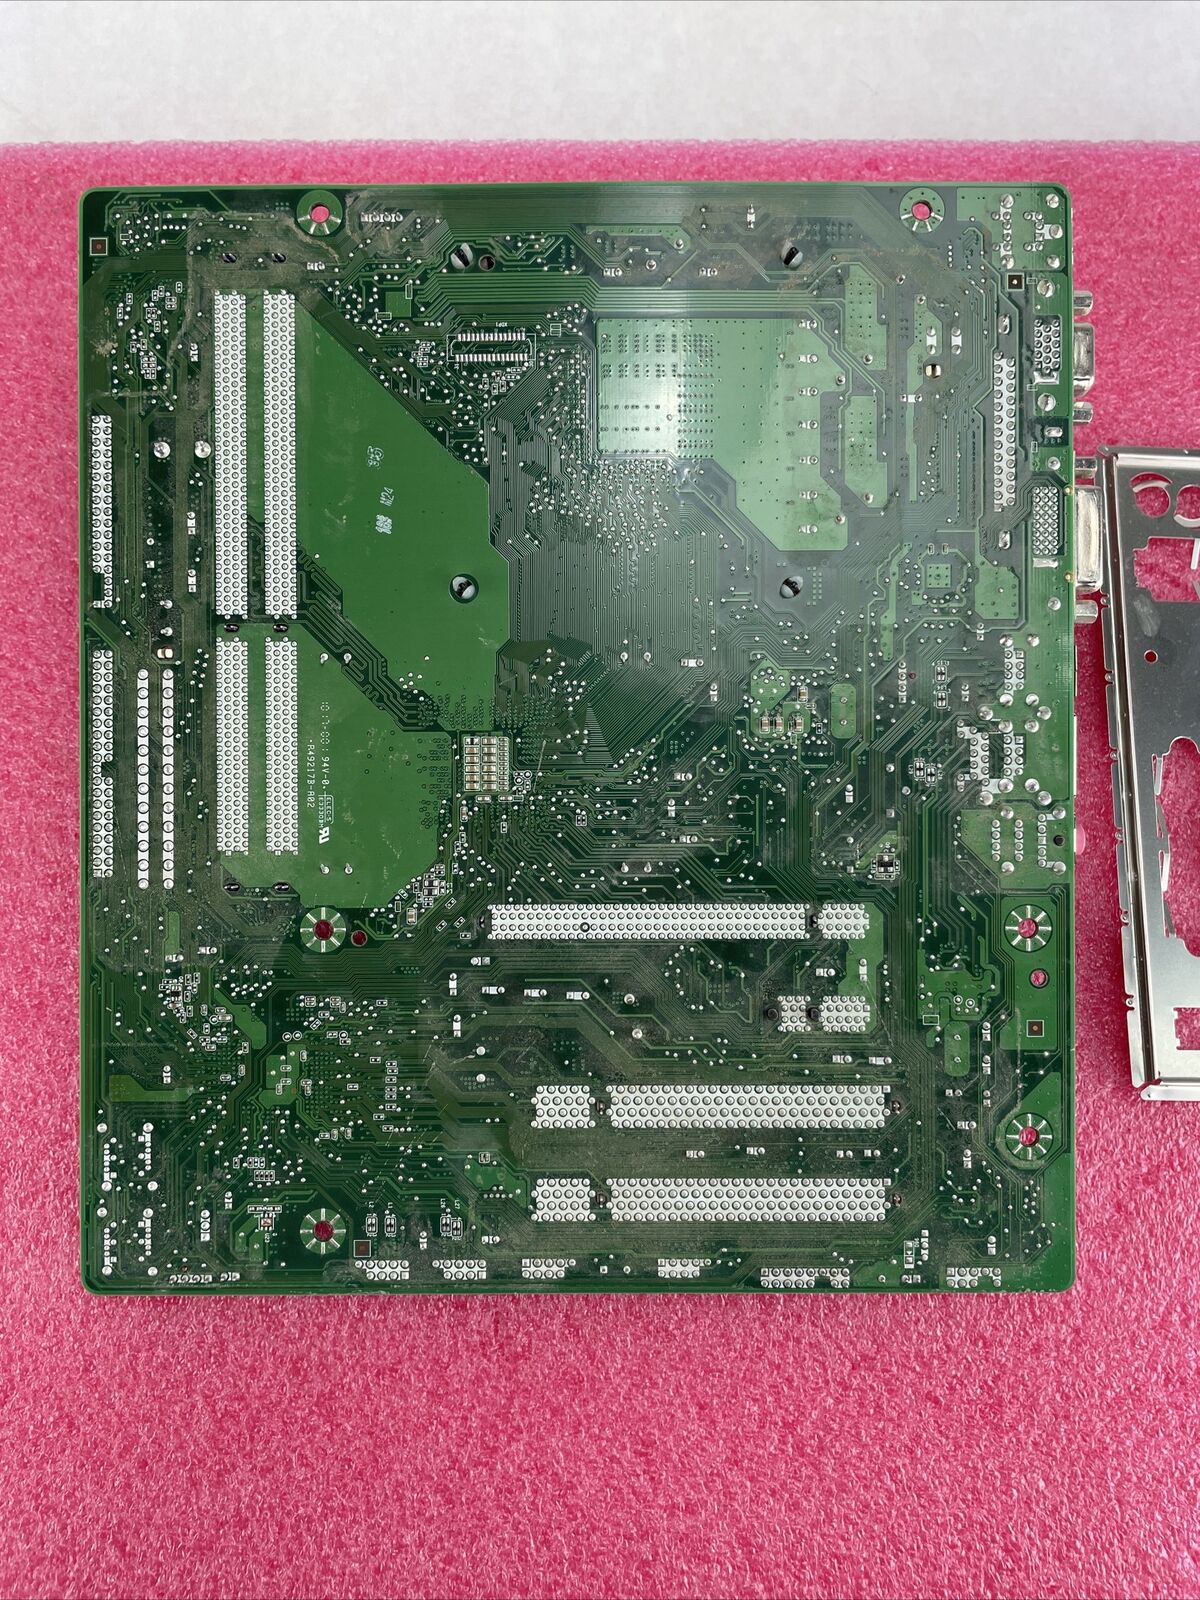 Intel DG41TX Motherboard Intel Pentium Dual-Core E6700 3.2GHz 4GB RAM w/Shield